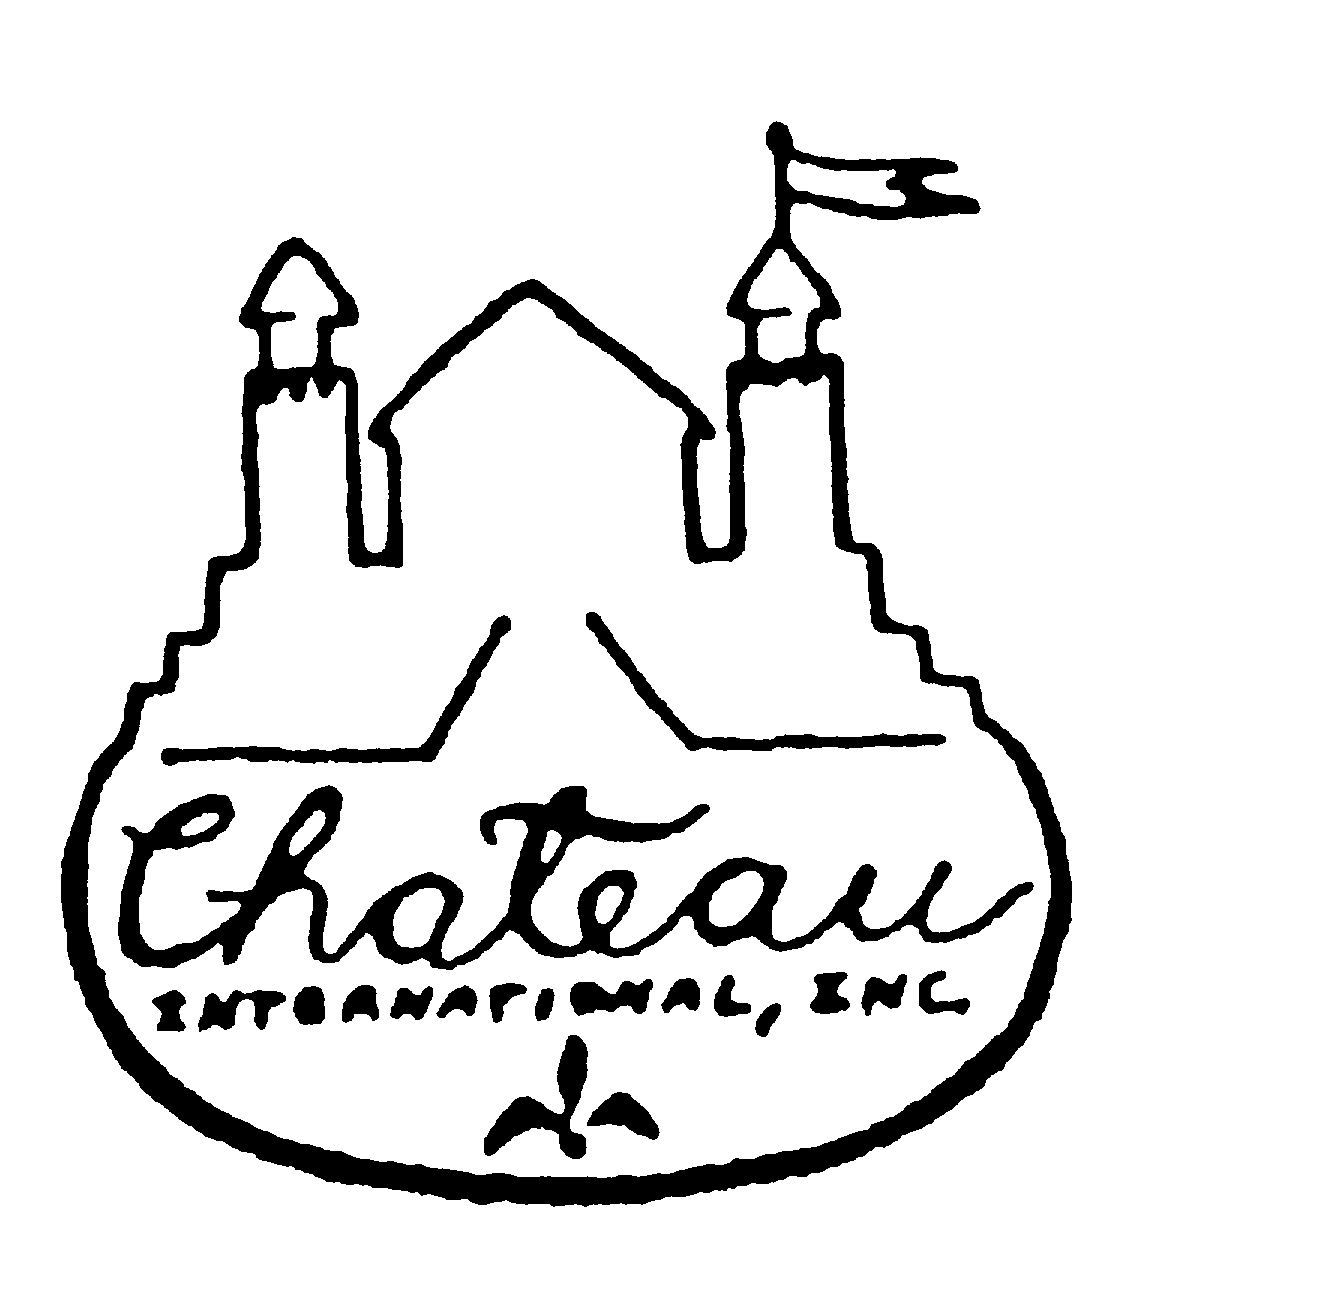  CHATEAU INTERNATIONAL, INC.